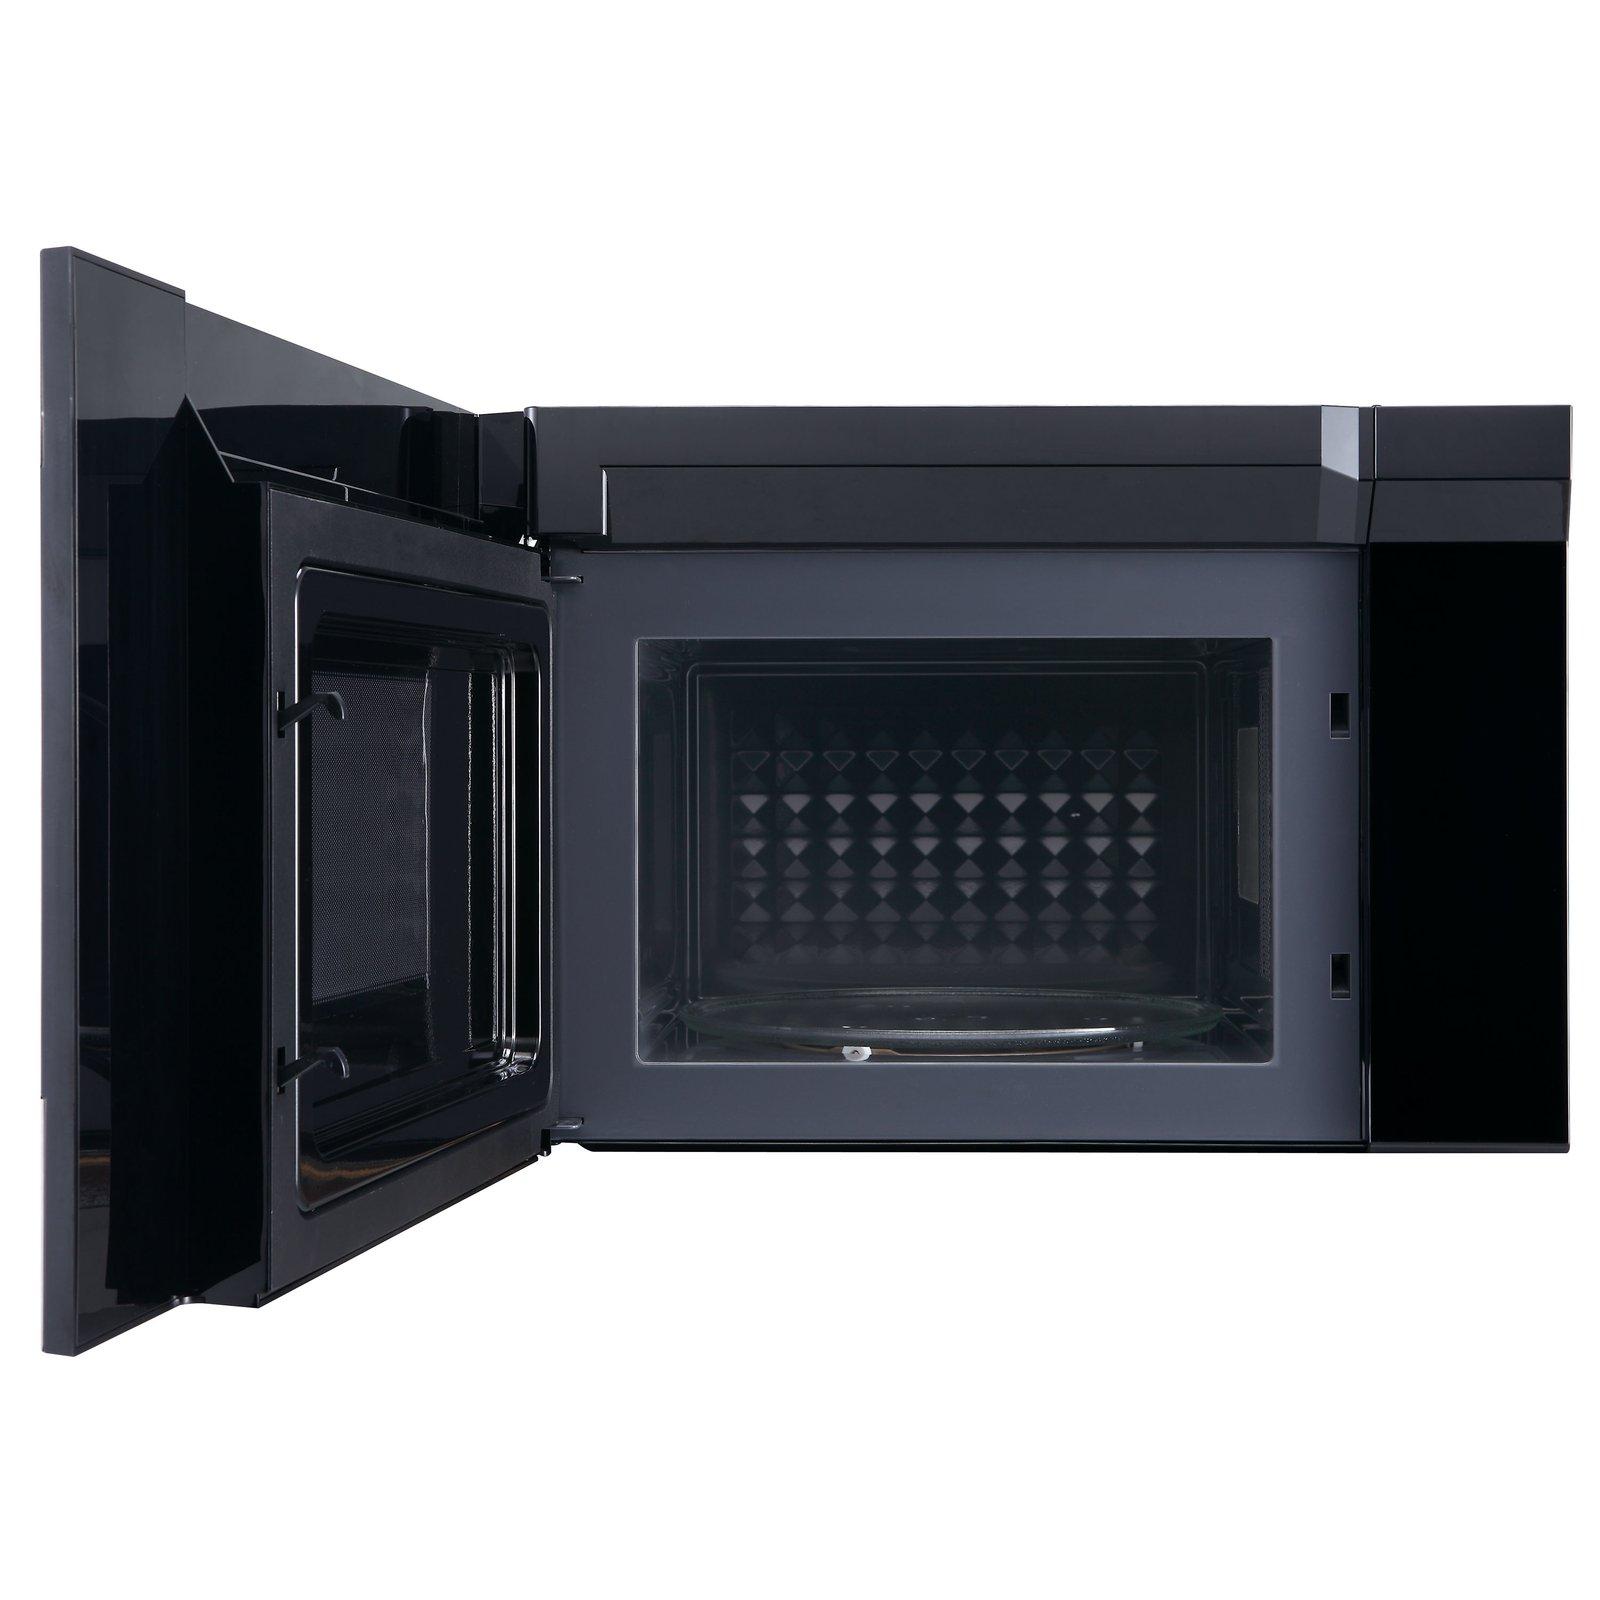 Avanti 1.3 cu. ft. OTR Microwave Oven - Stainless Steel / 1.3 cu. ft.